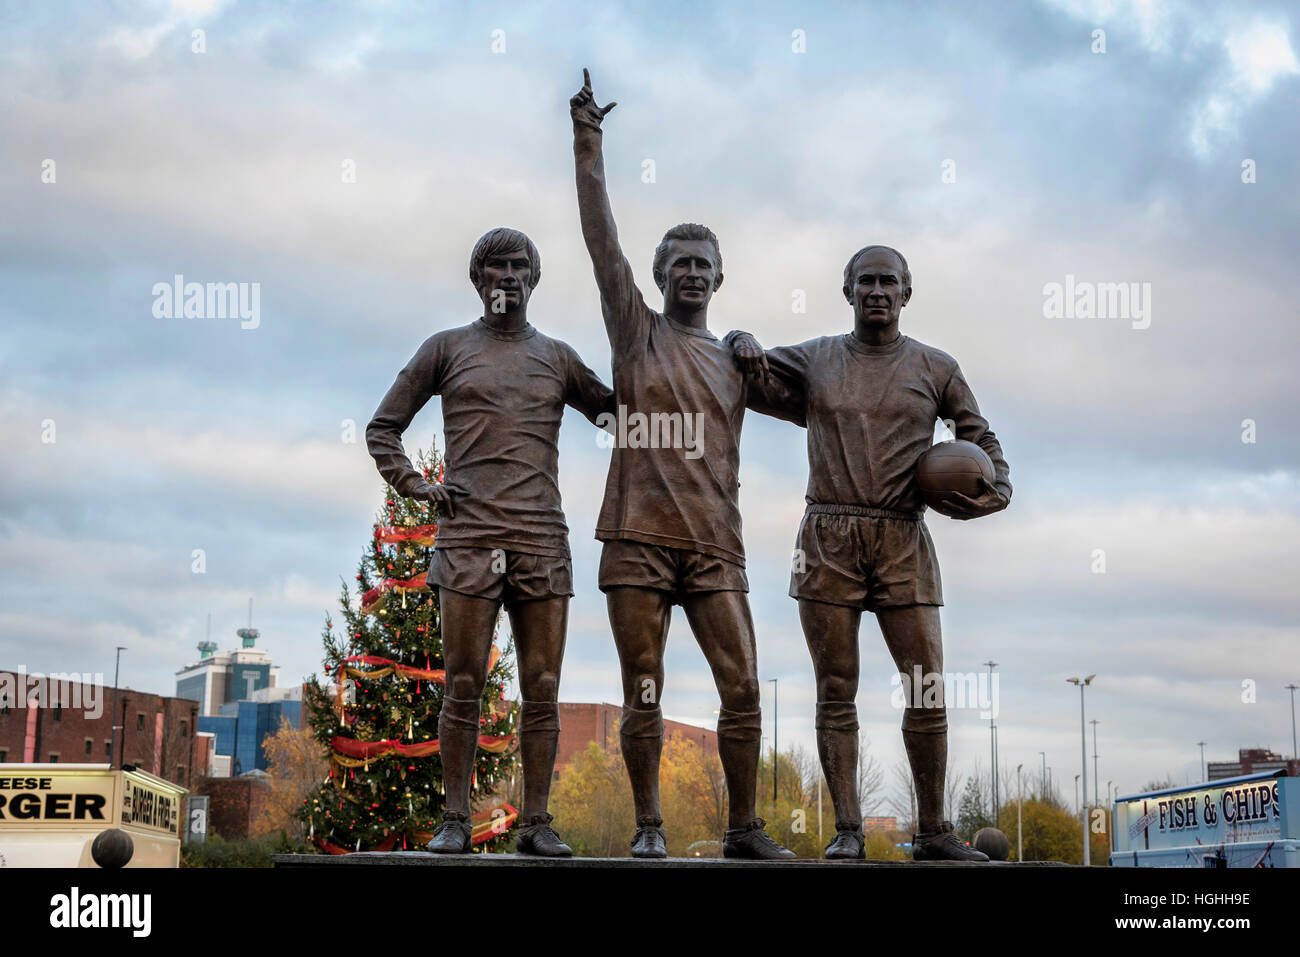 George Best Denis legge Bobby Charlton statua a Manchester United Foto Stock